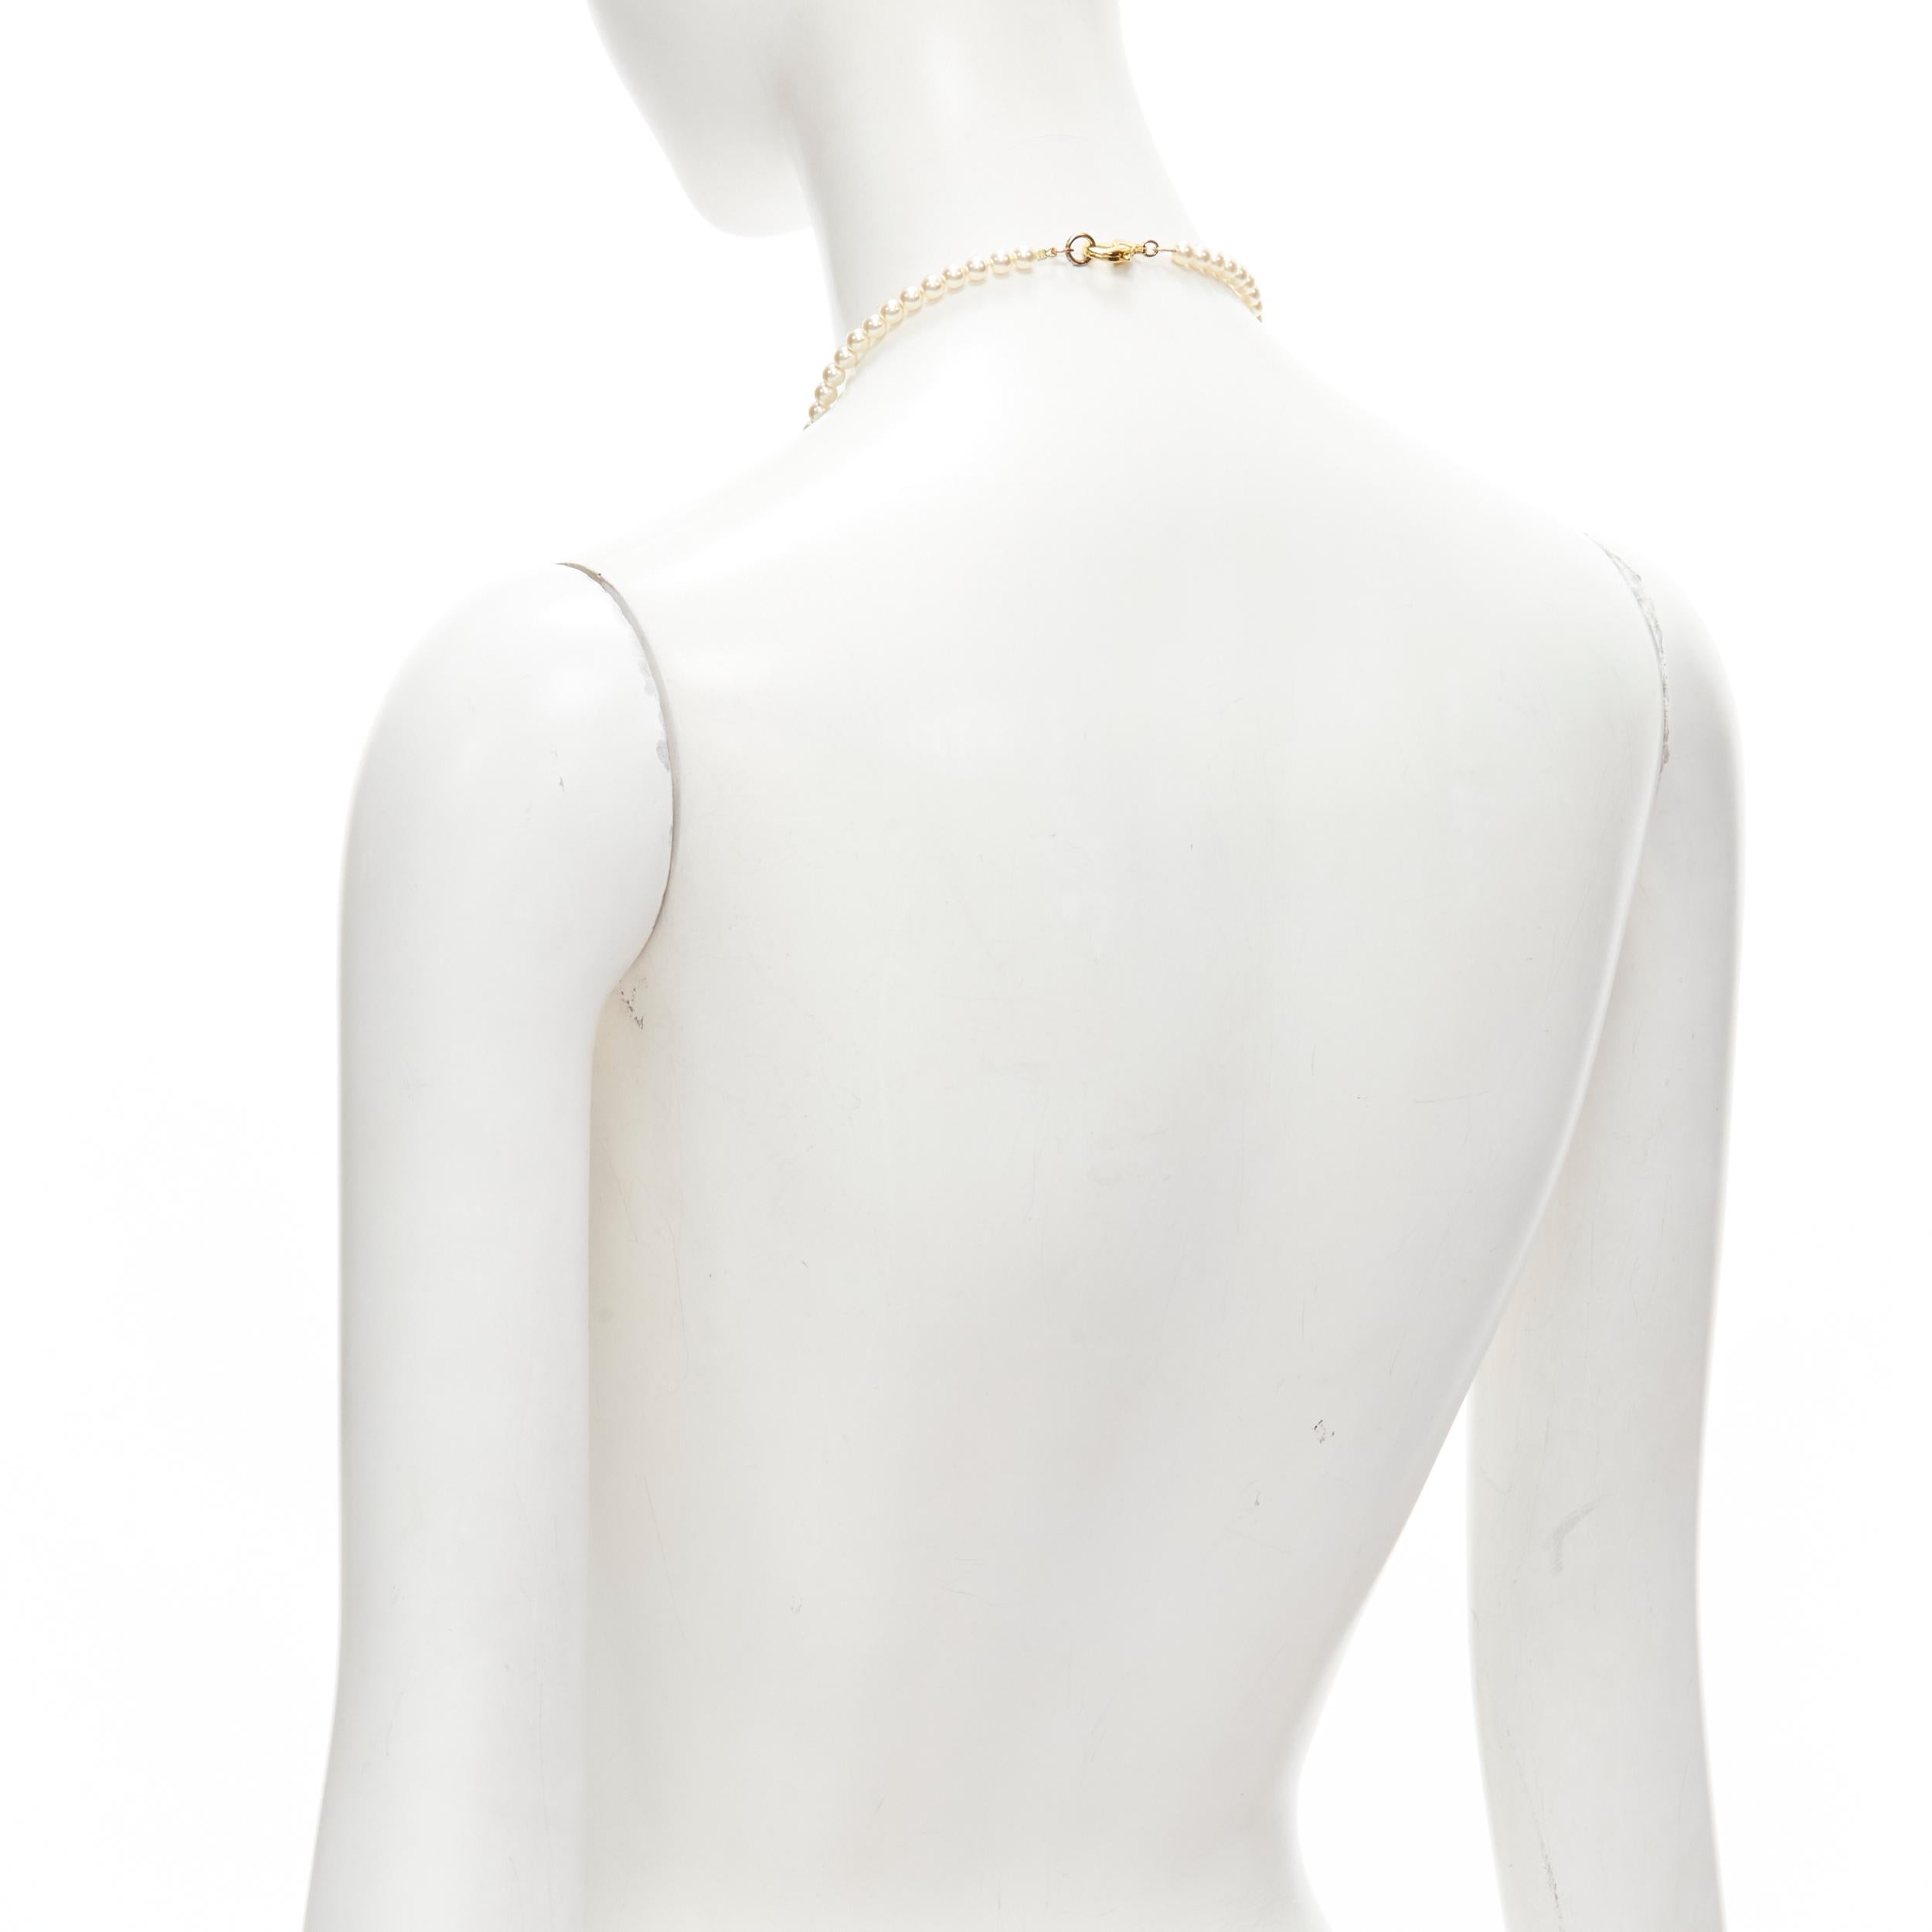 LE BIJOUX DE SOPHIE Hello Kitty pearl cake bow necklace For Sale 1